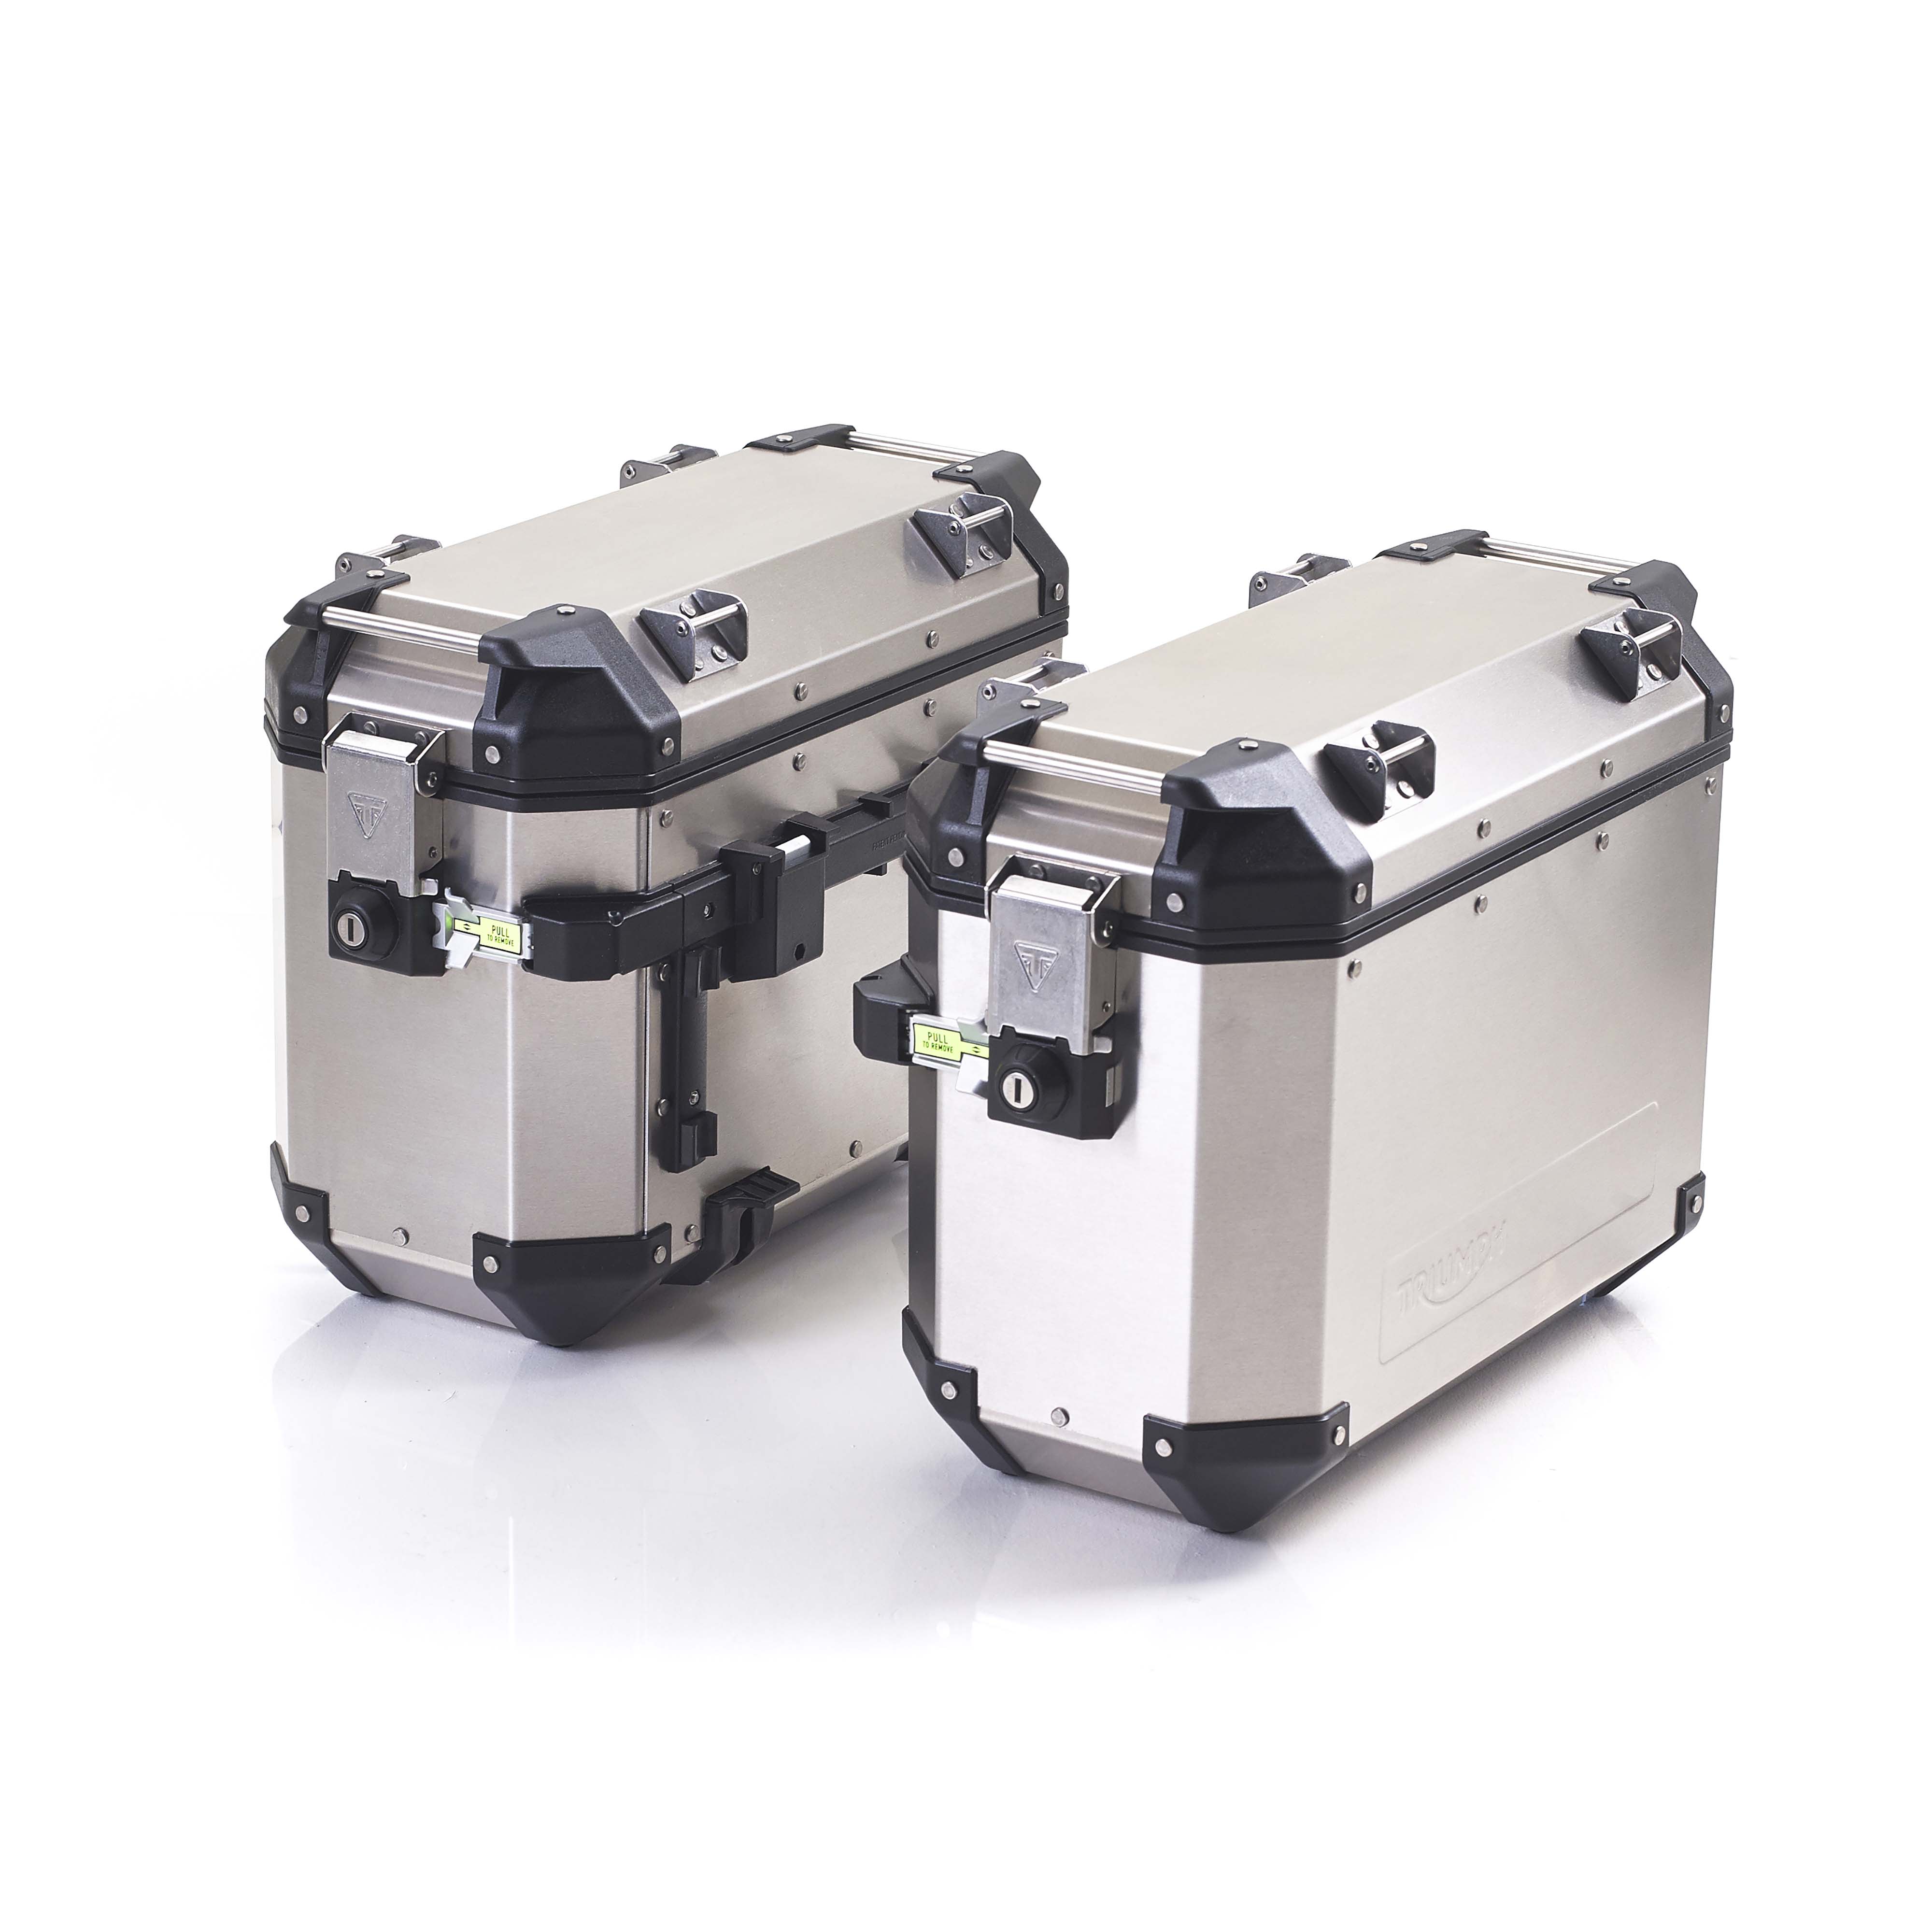 A9500600-Luggage-ExpeditionAluminiumPannier-Silver-V1